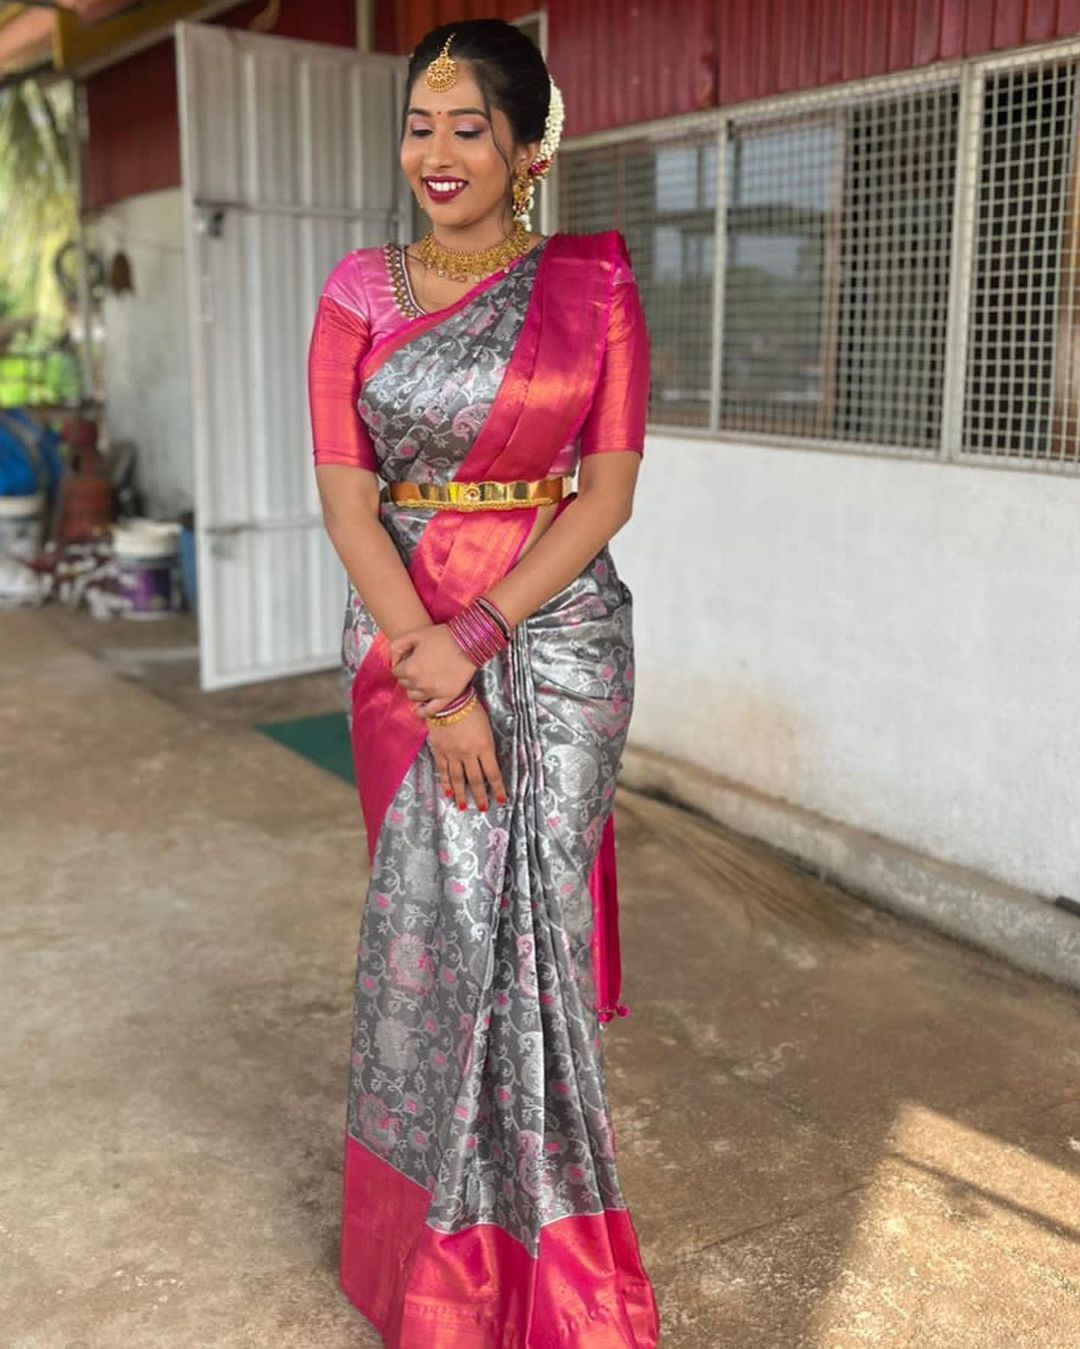 Indian Wedding Saree - Traditional Silk pink saree combination of green  blouse with Embroidered, thread work . . Price: US$ 55.55 . . Product Code:  1660245 . . #indianweddingsaree #silk #weddingdress #indiandress #